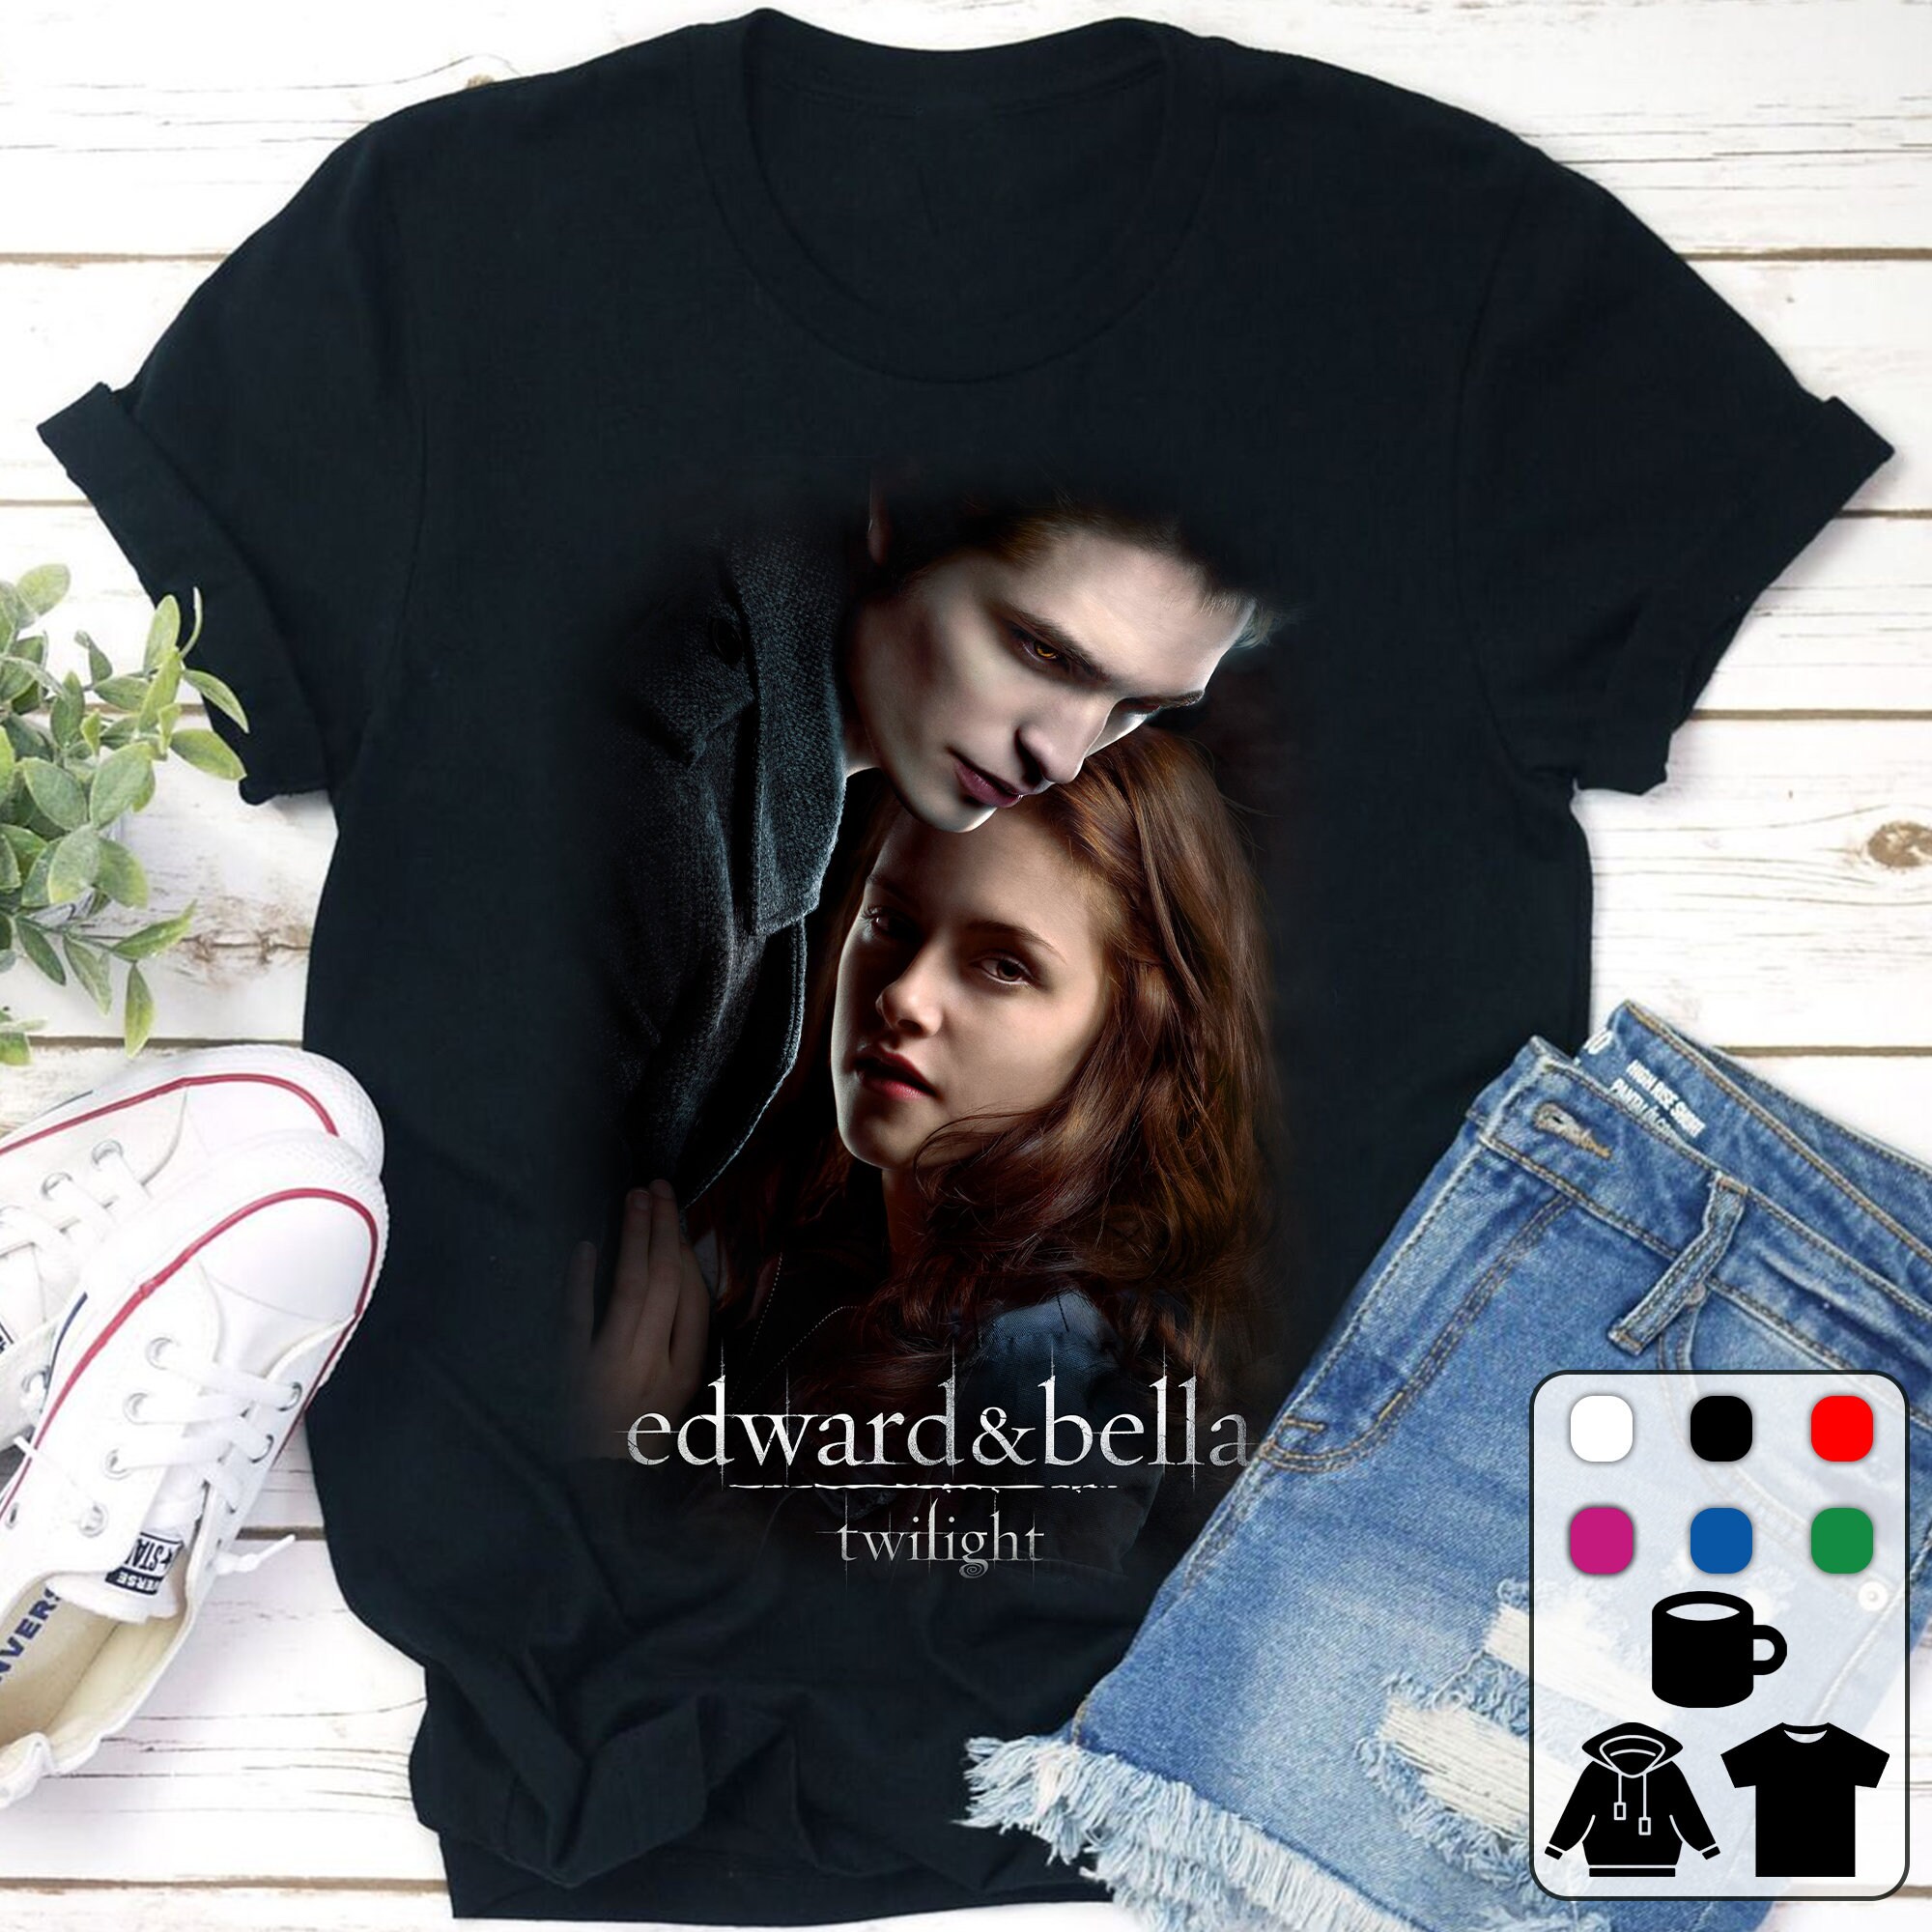 Twilight 2008 Shirts, Edward & Bella The Twilight Saga Shirt